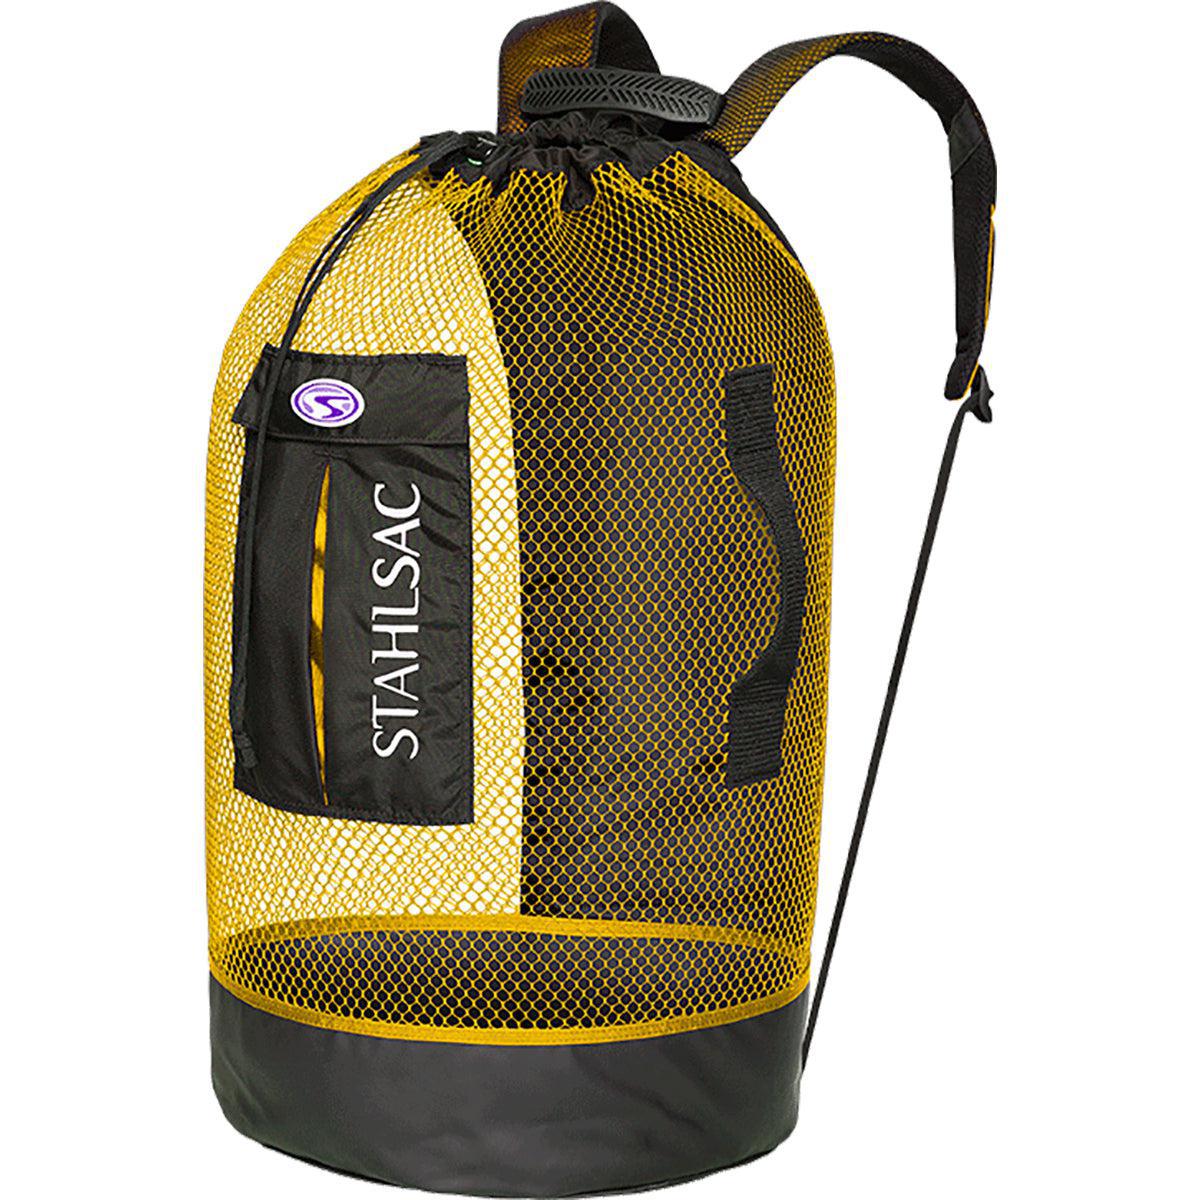 Stahlsac Panama Mesh Backpack-Yellow